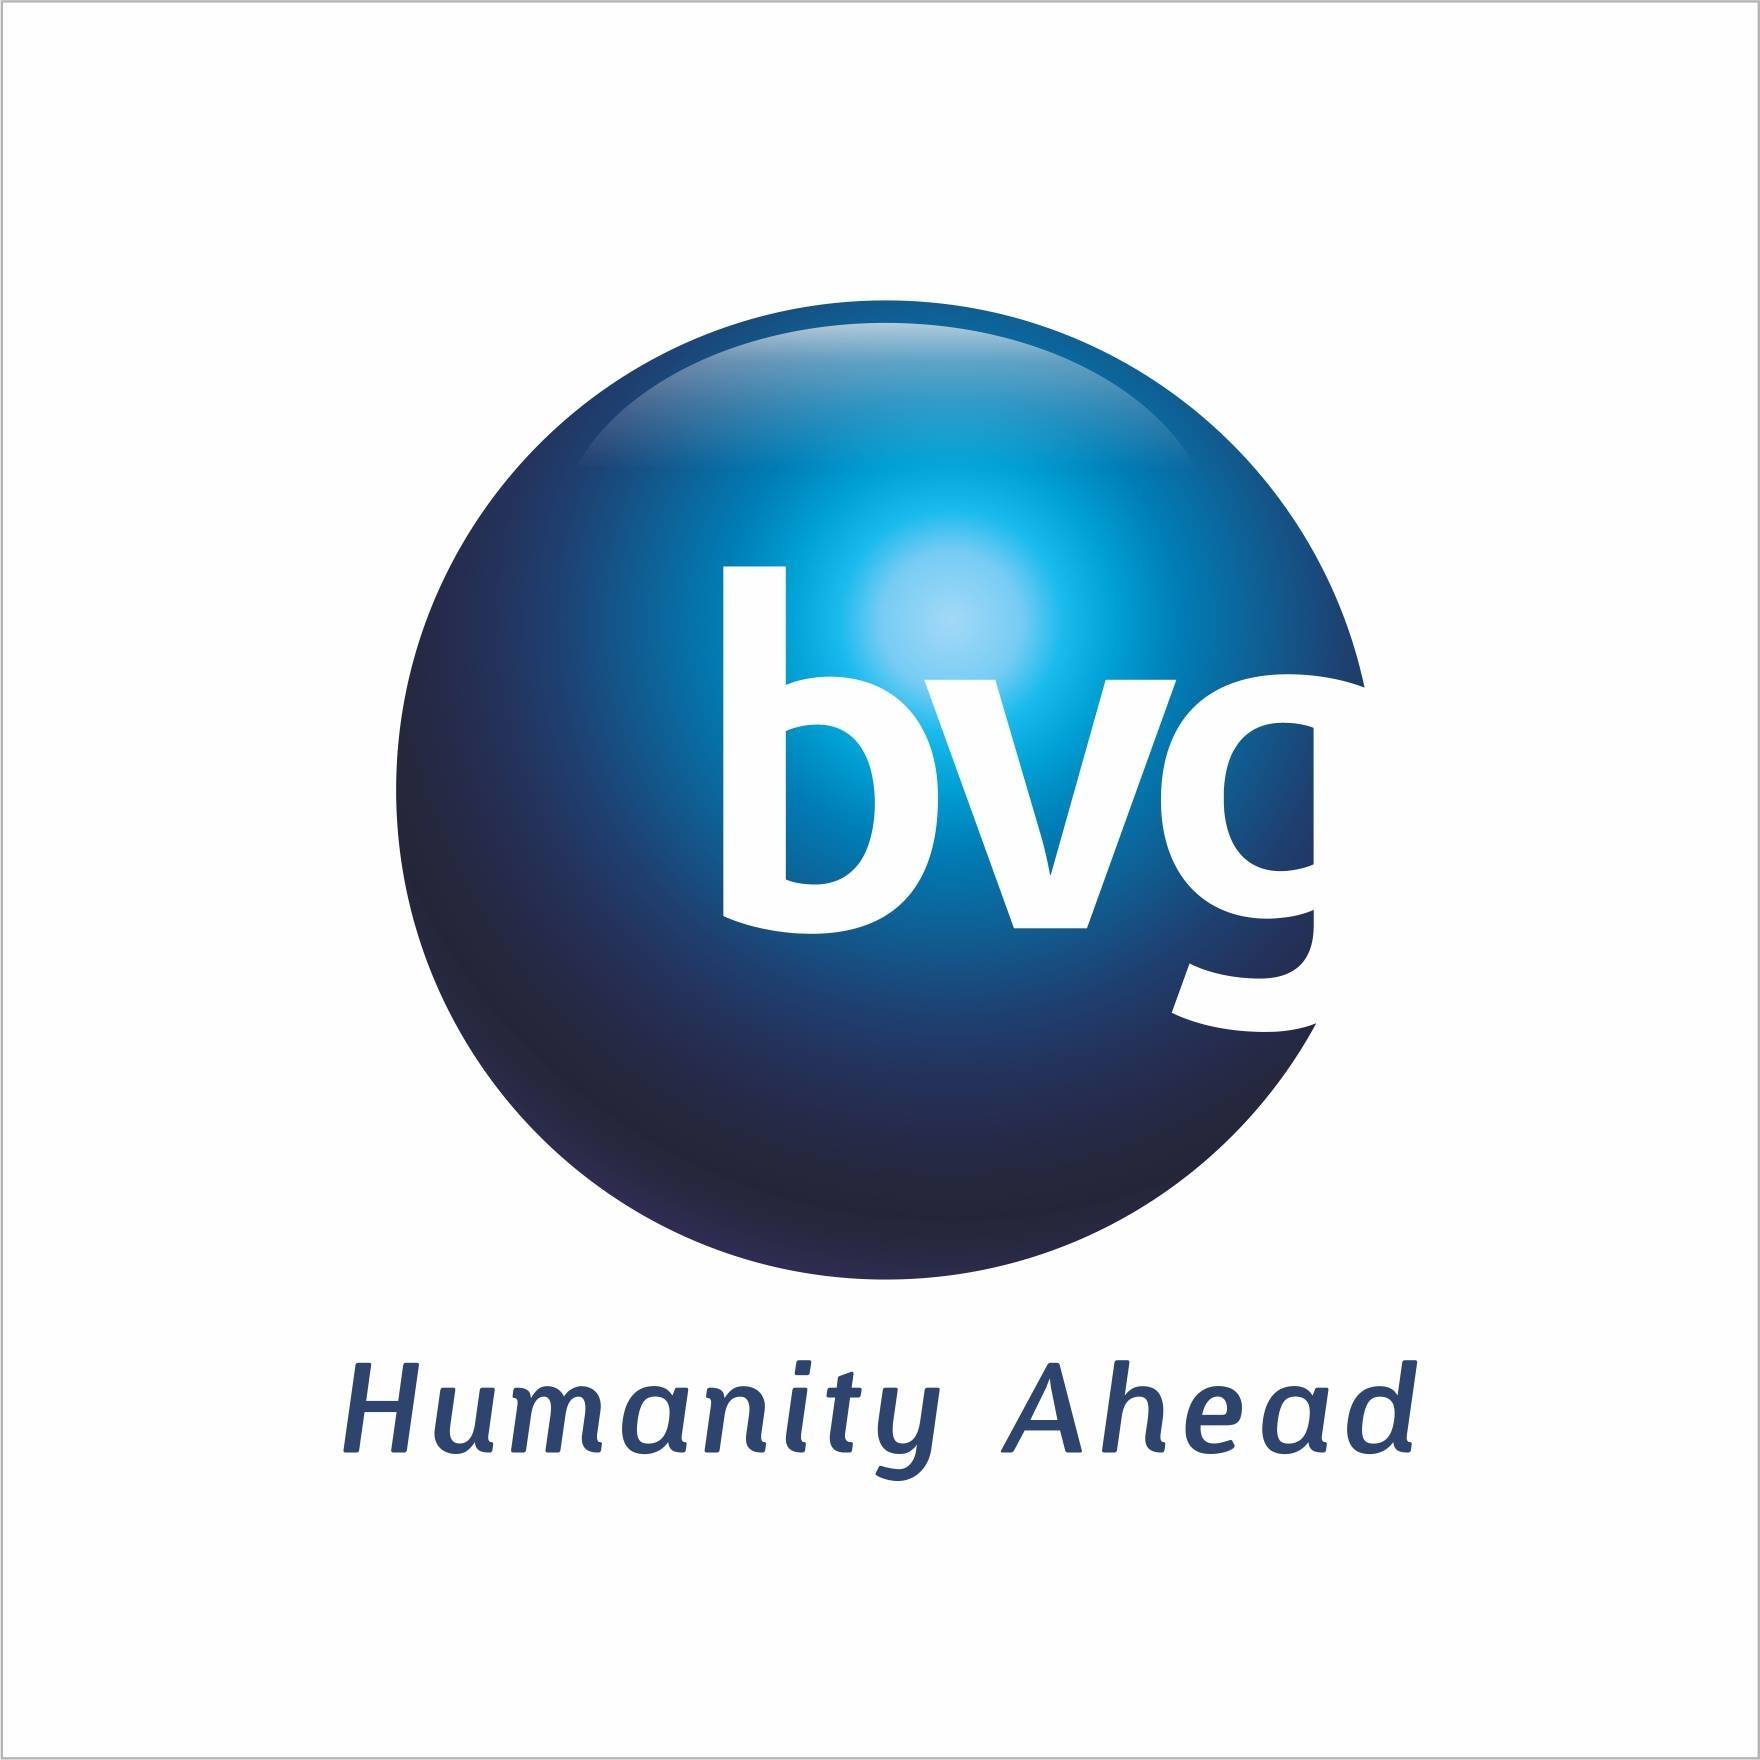 Bvg India Ltd